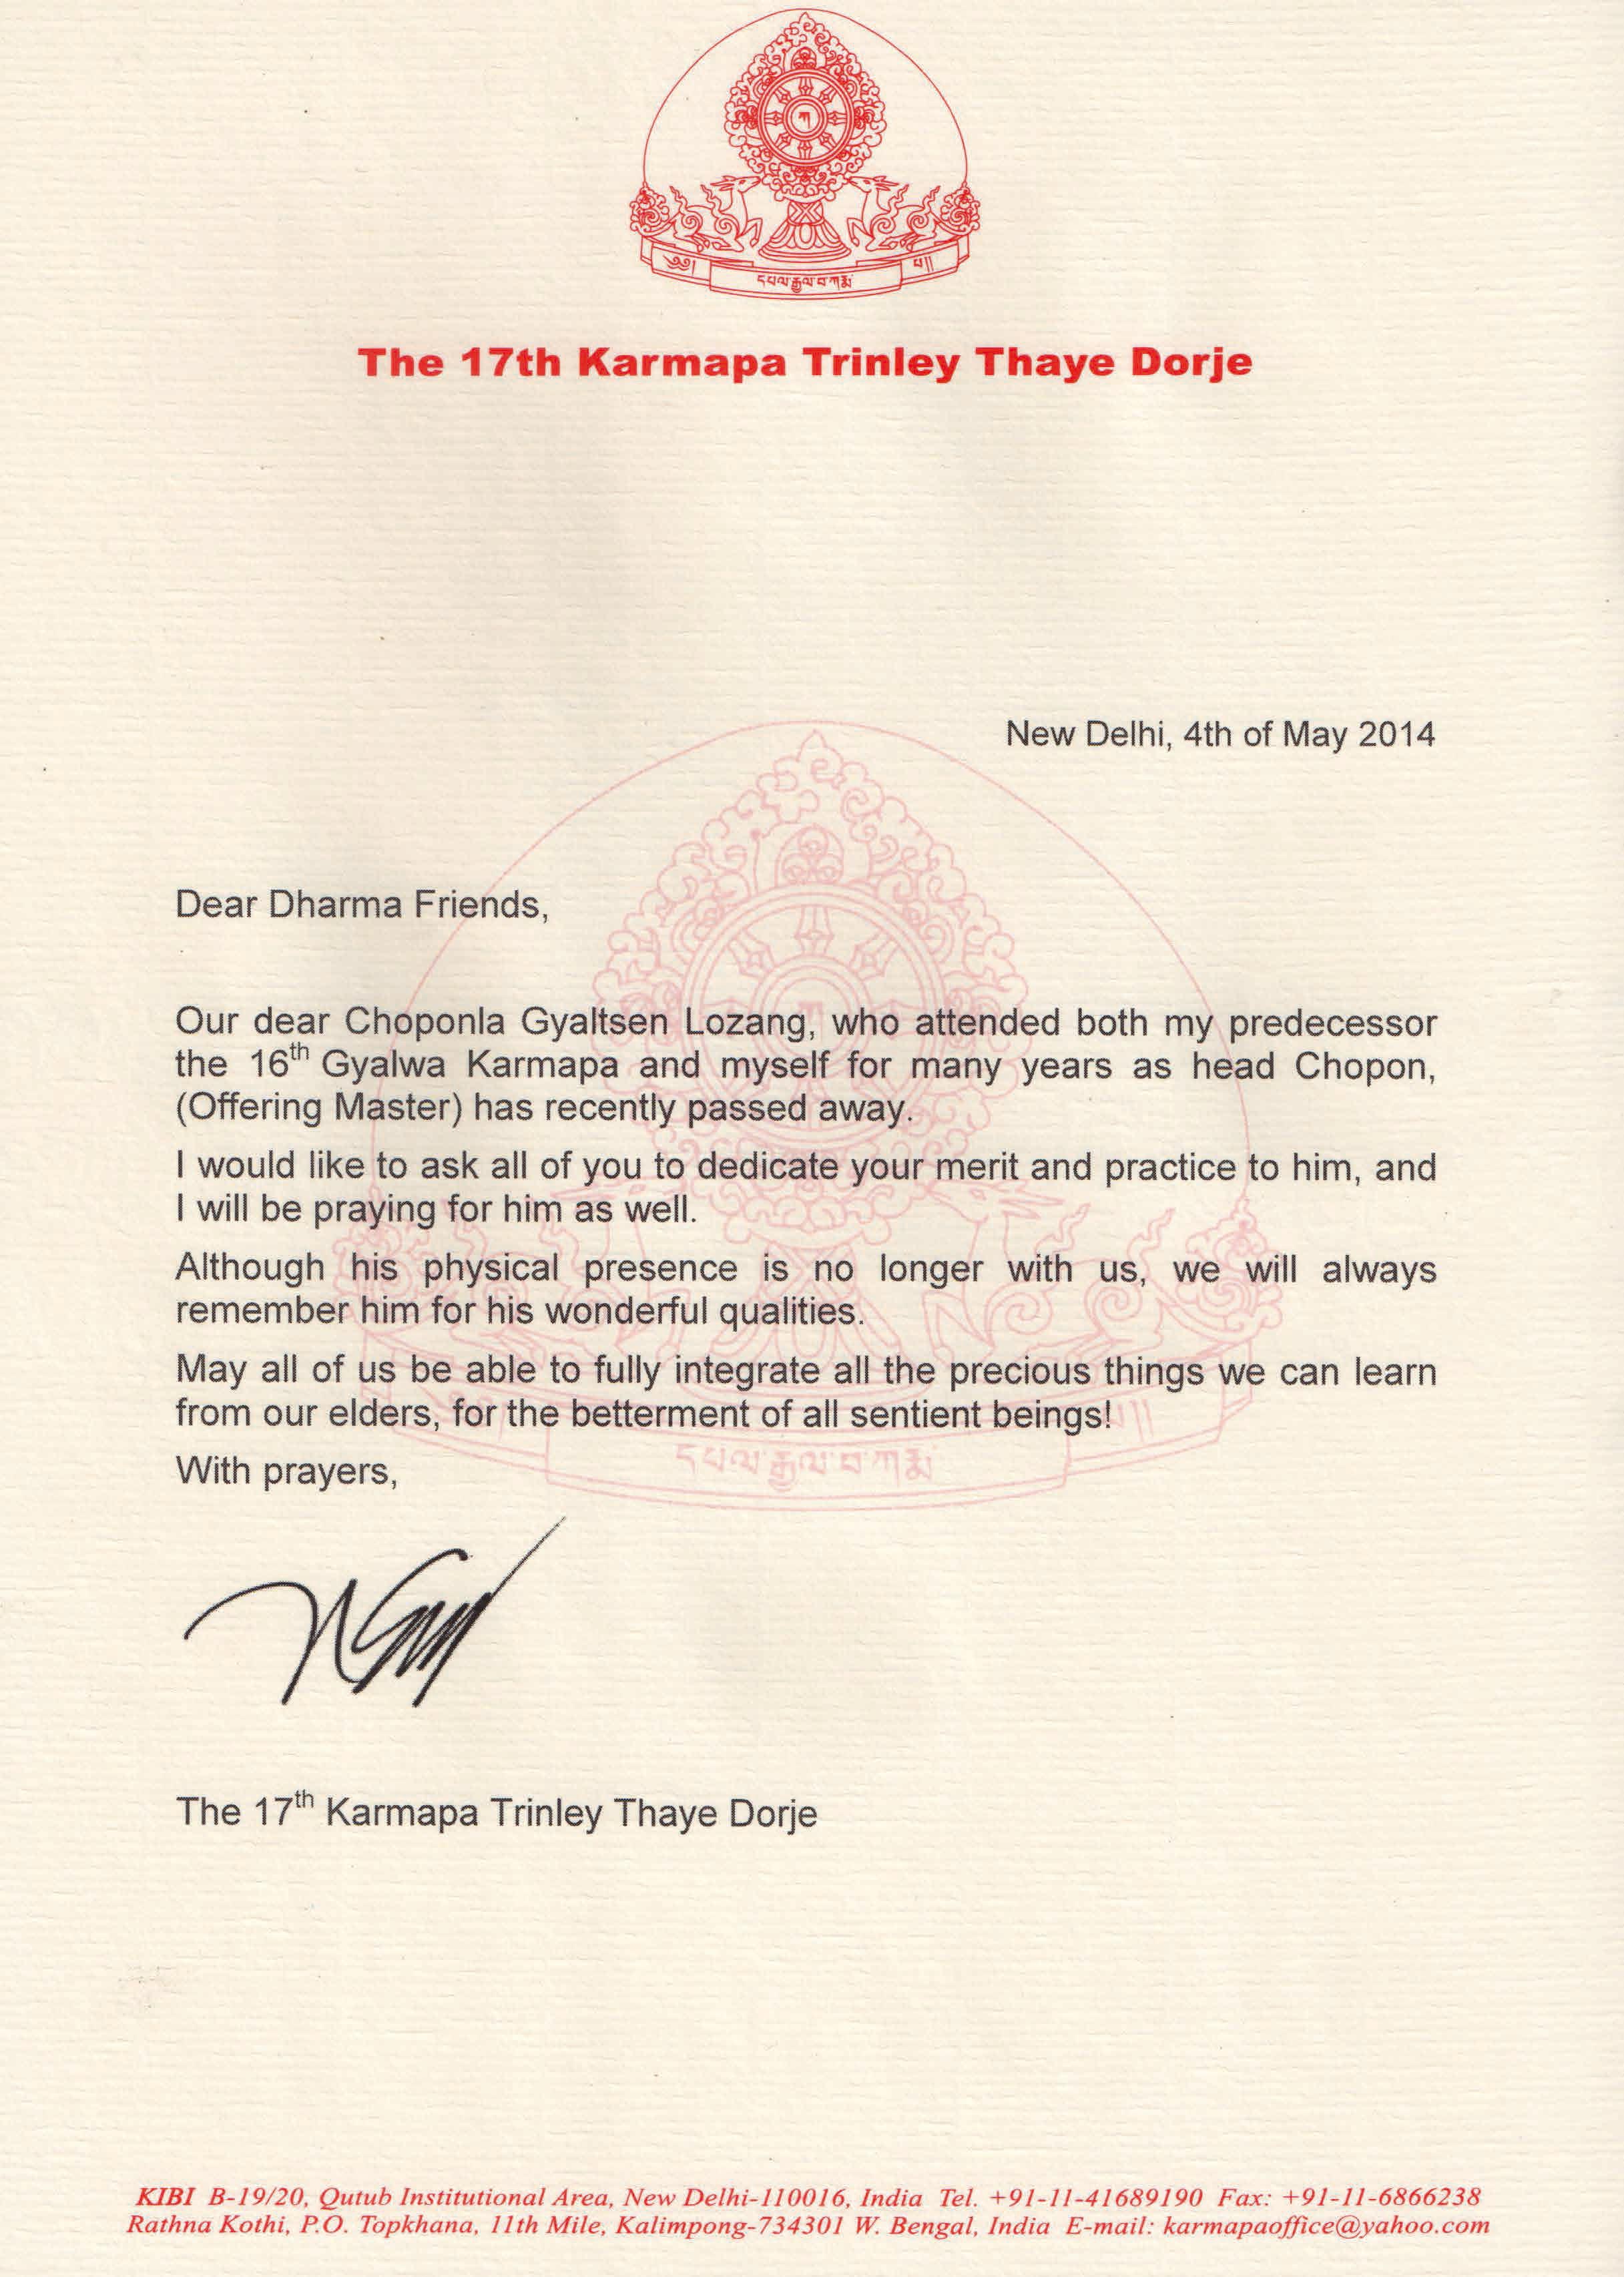 Message from His Holiness Karmapa Thaye Dorje about death of Choponla Gyaltsen Lozang